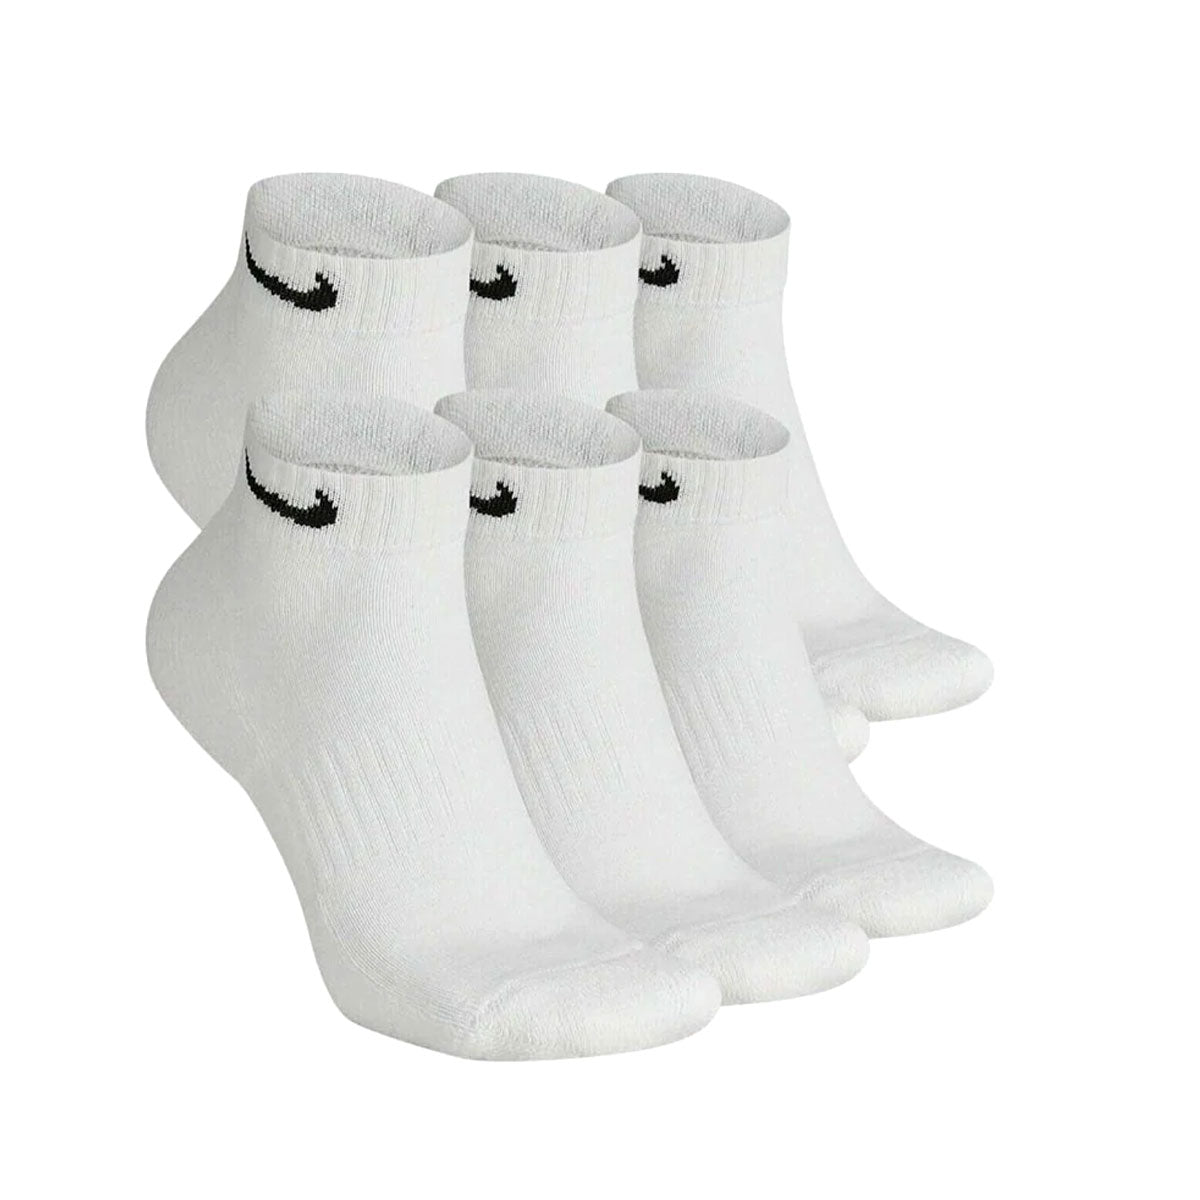 Nike Men's Everyday Plus Cushioned Low Cut Training Socks White - 6 Pack